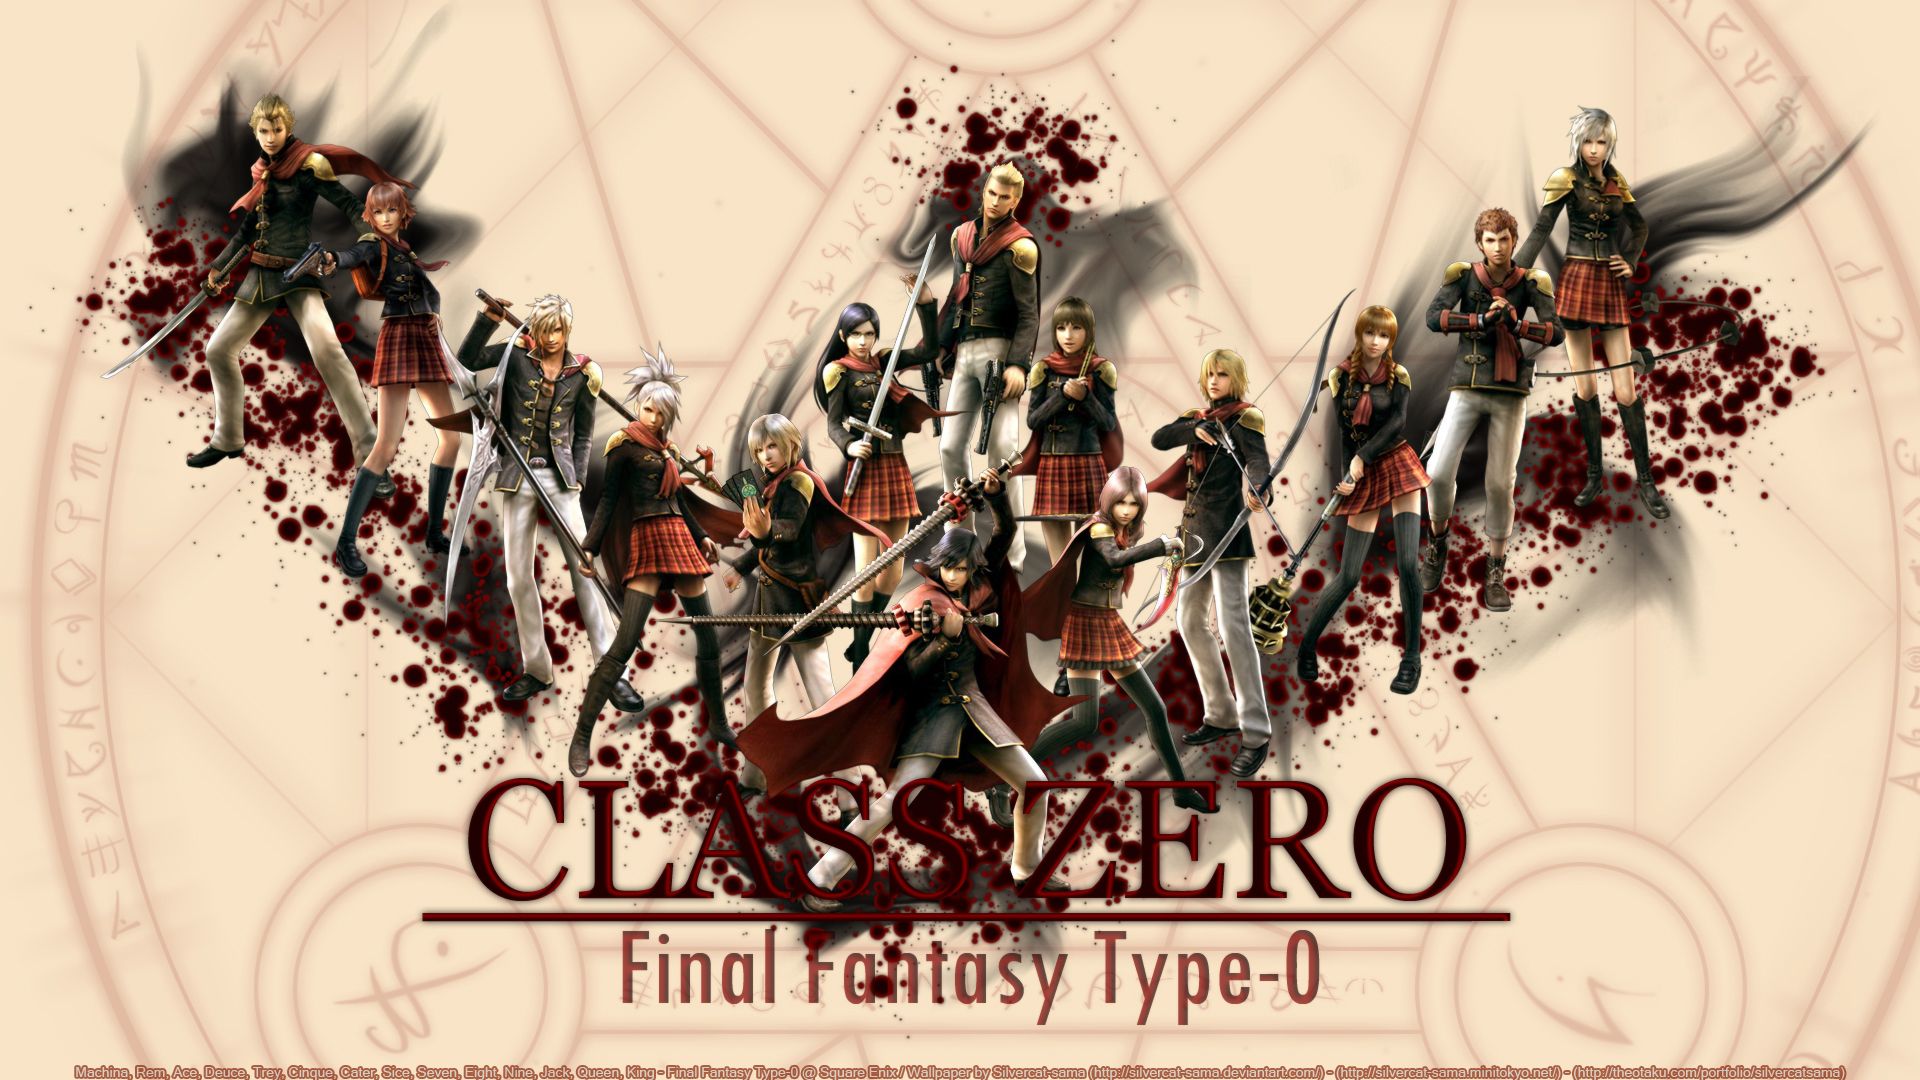 Final Fantasy Type 0 Wallpaper: Class Zero